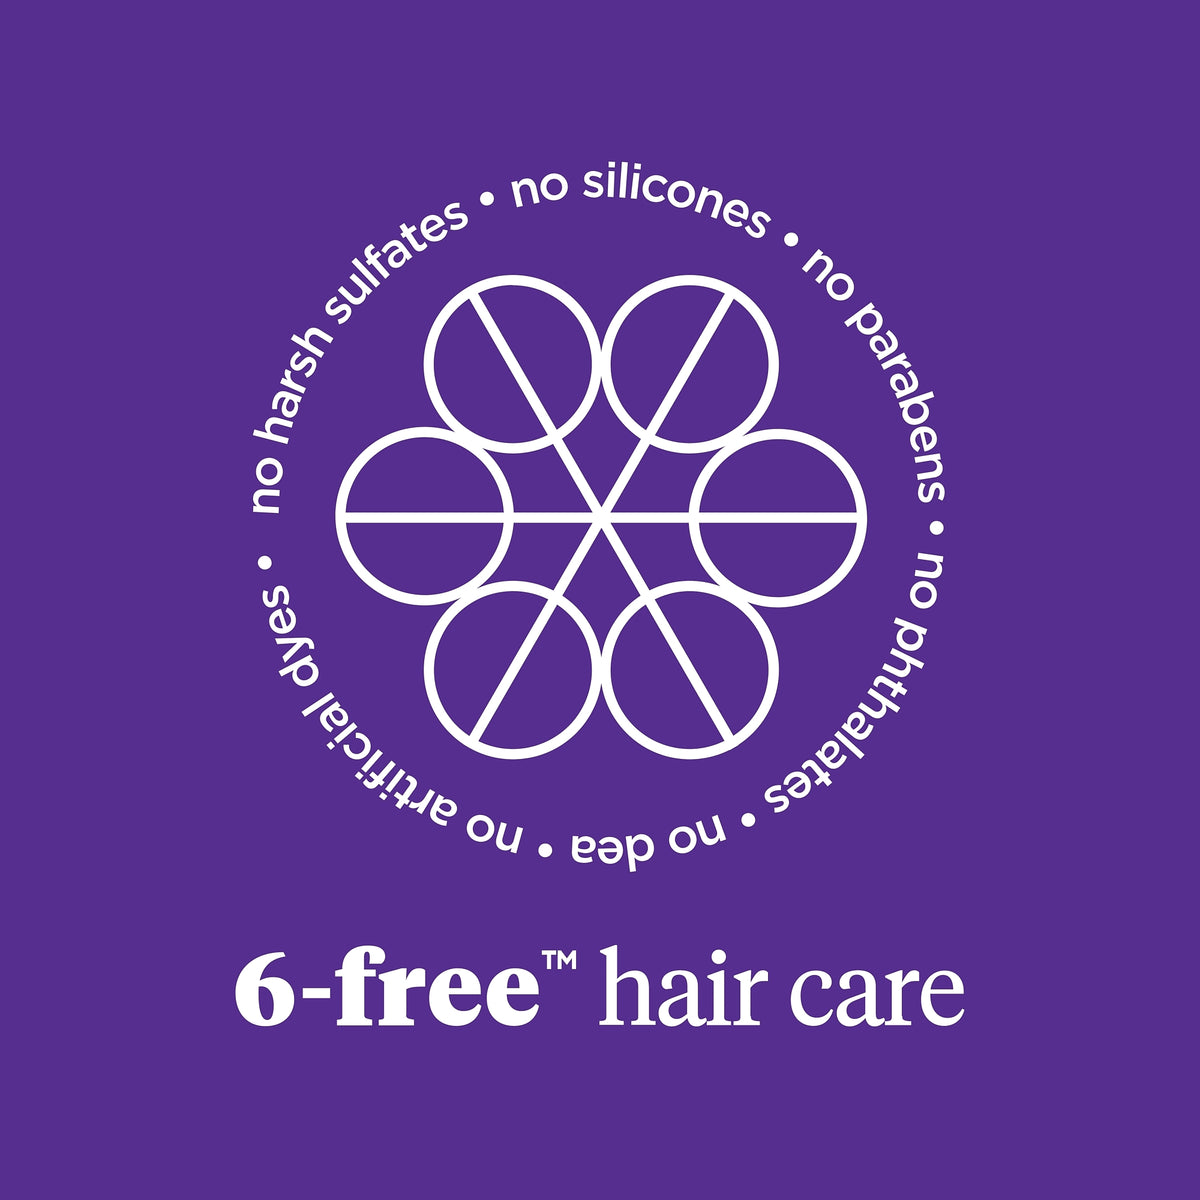 Curl Charisma™ Define + Hydrate Hair Care Minis